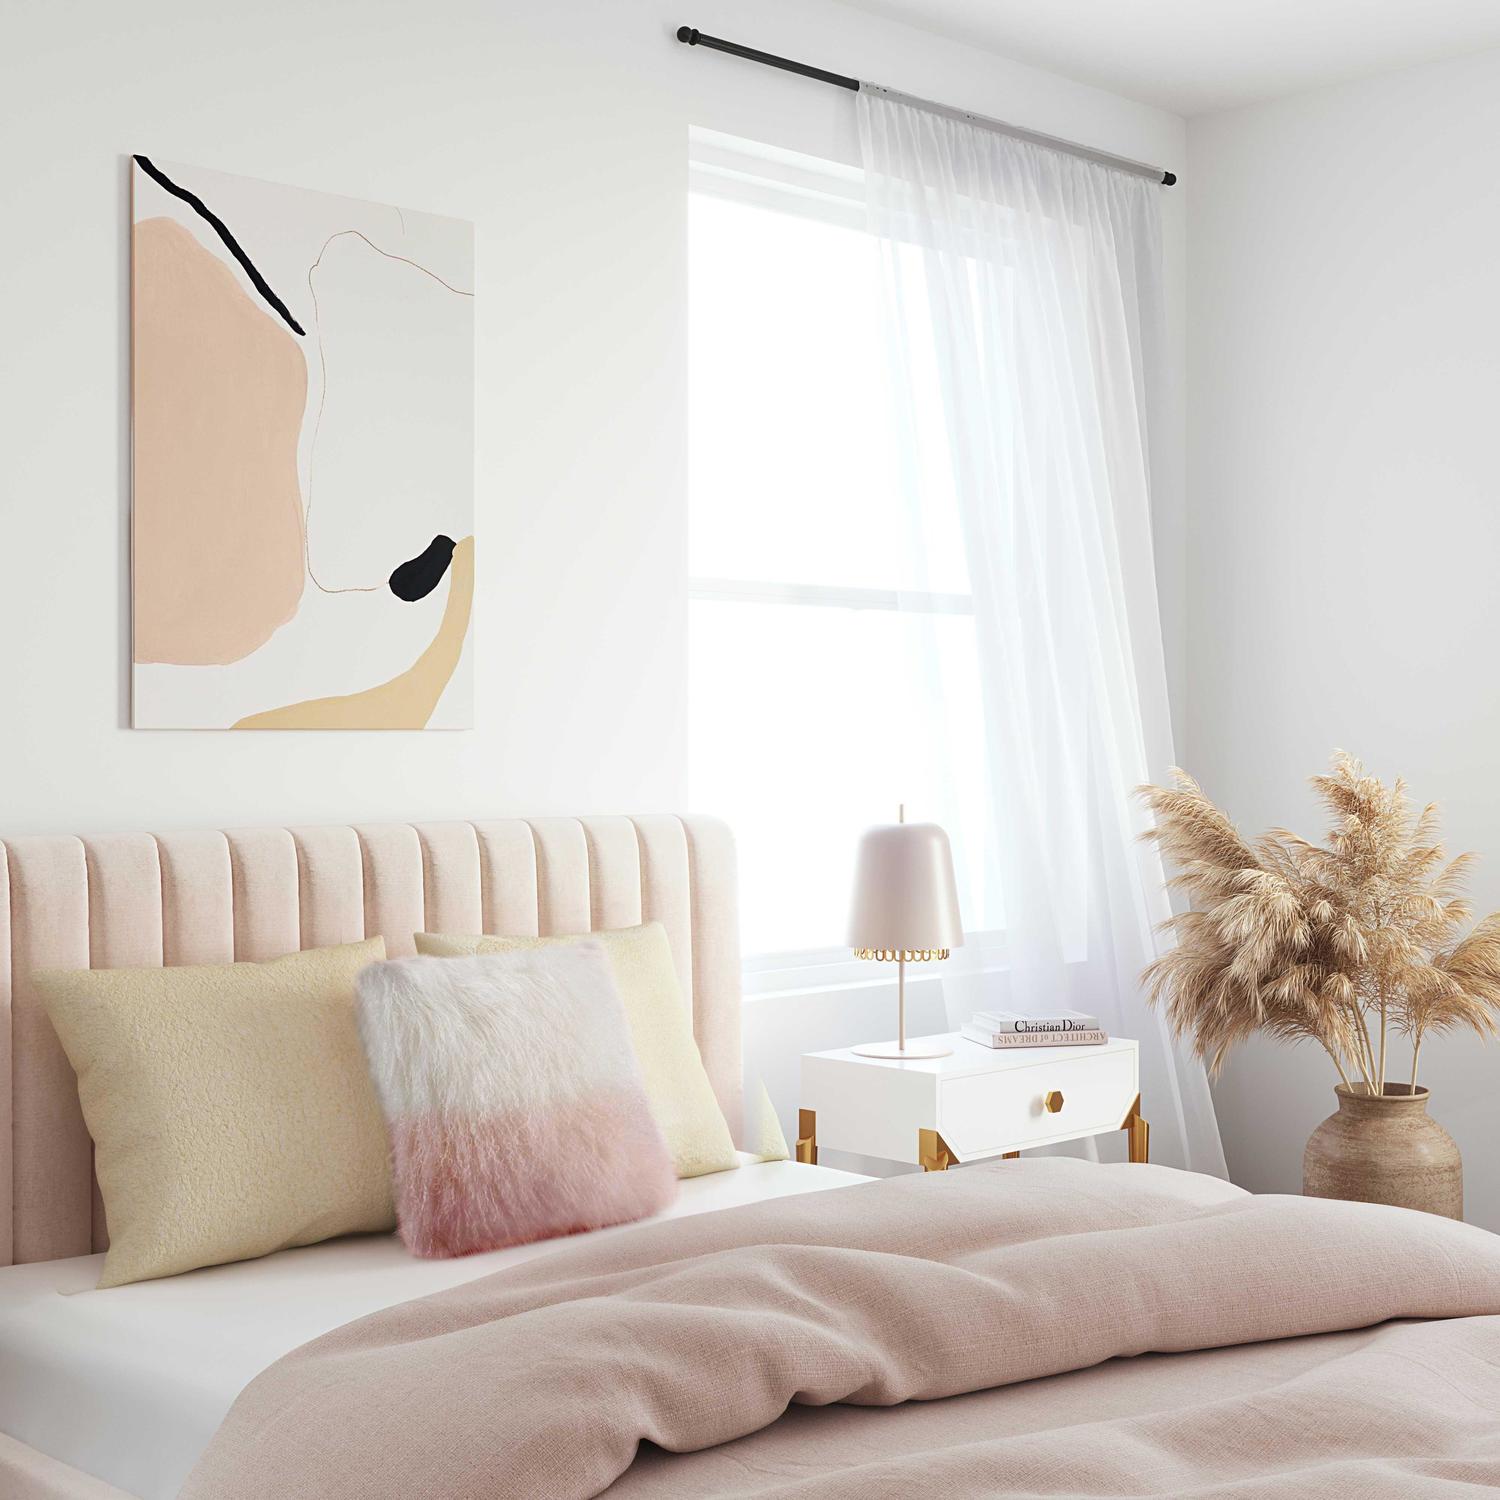 amazing throw pillows Contemporary Design Furniture Pillows Decorative Throw Pillows Blush